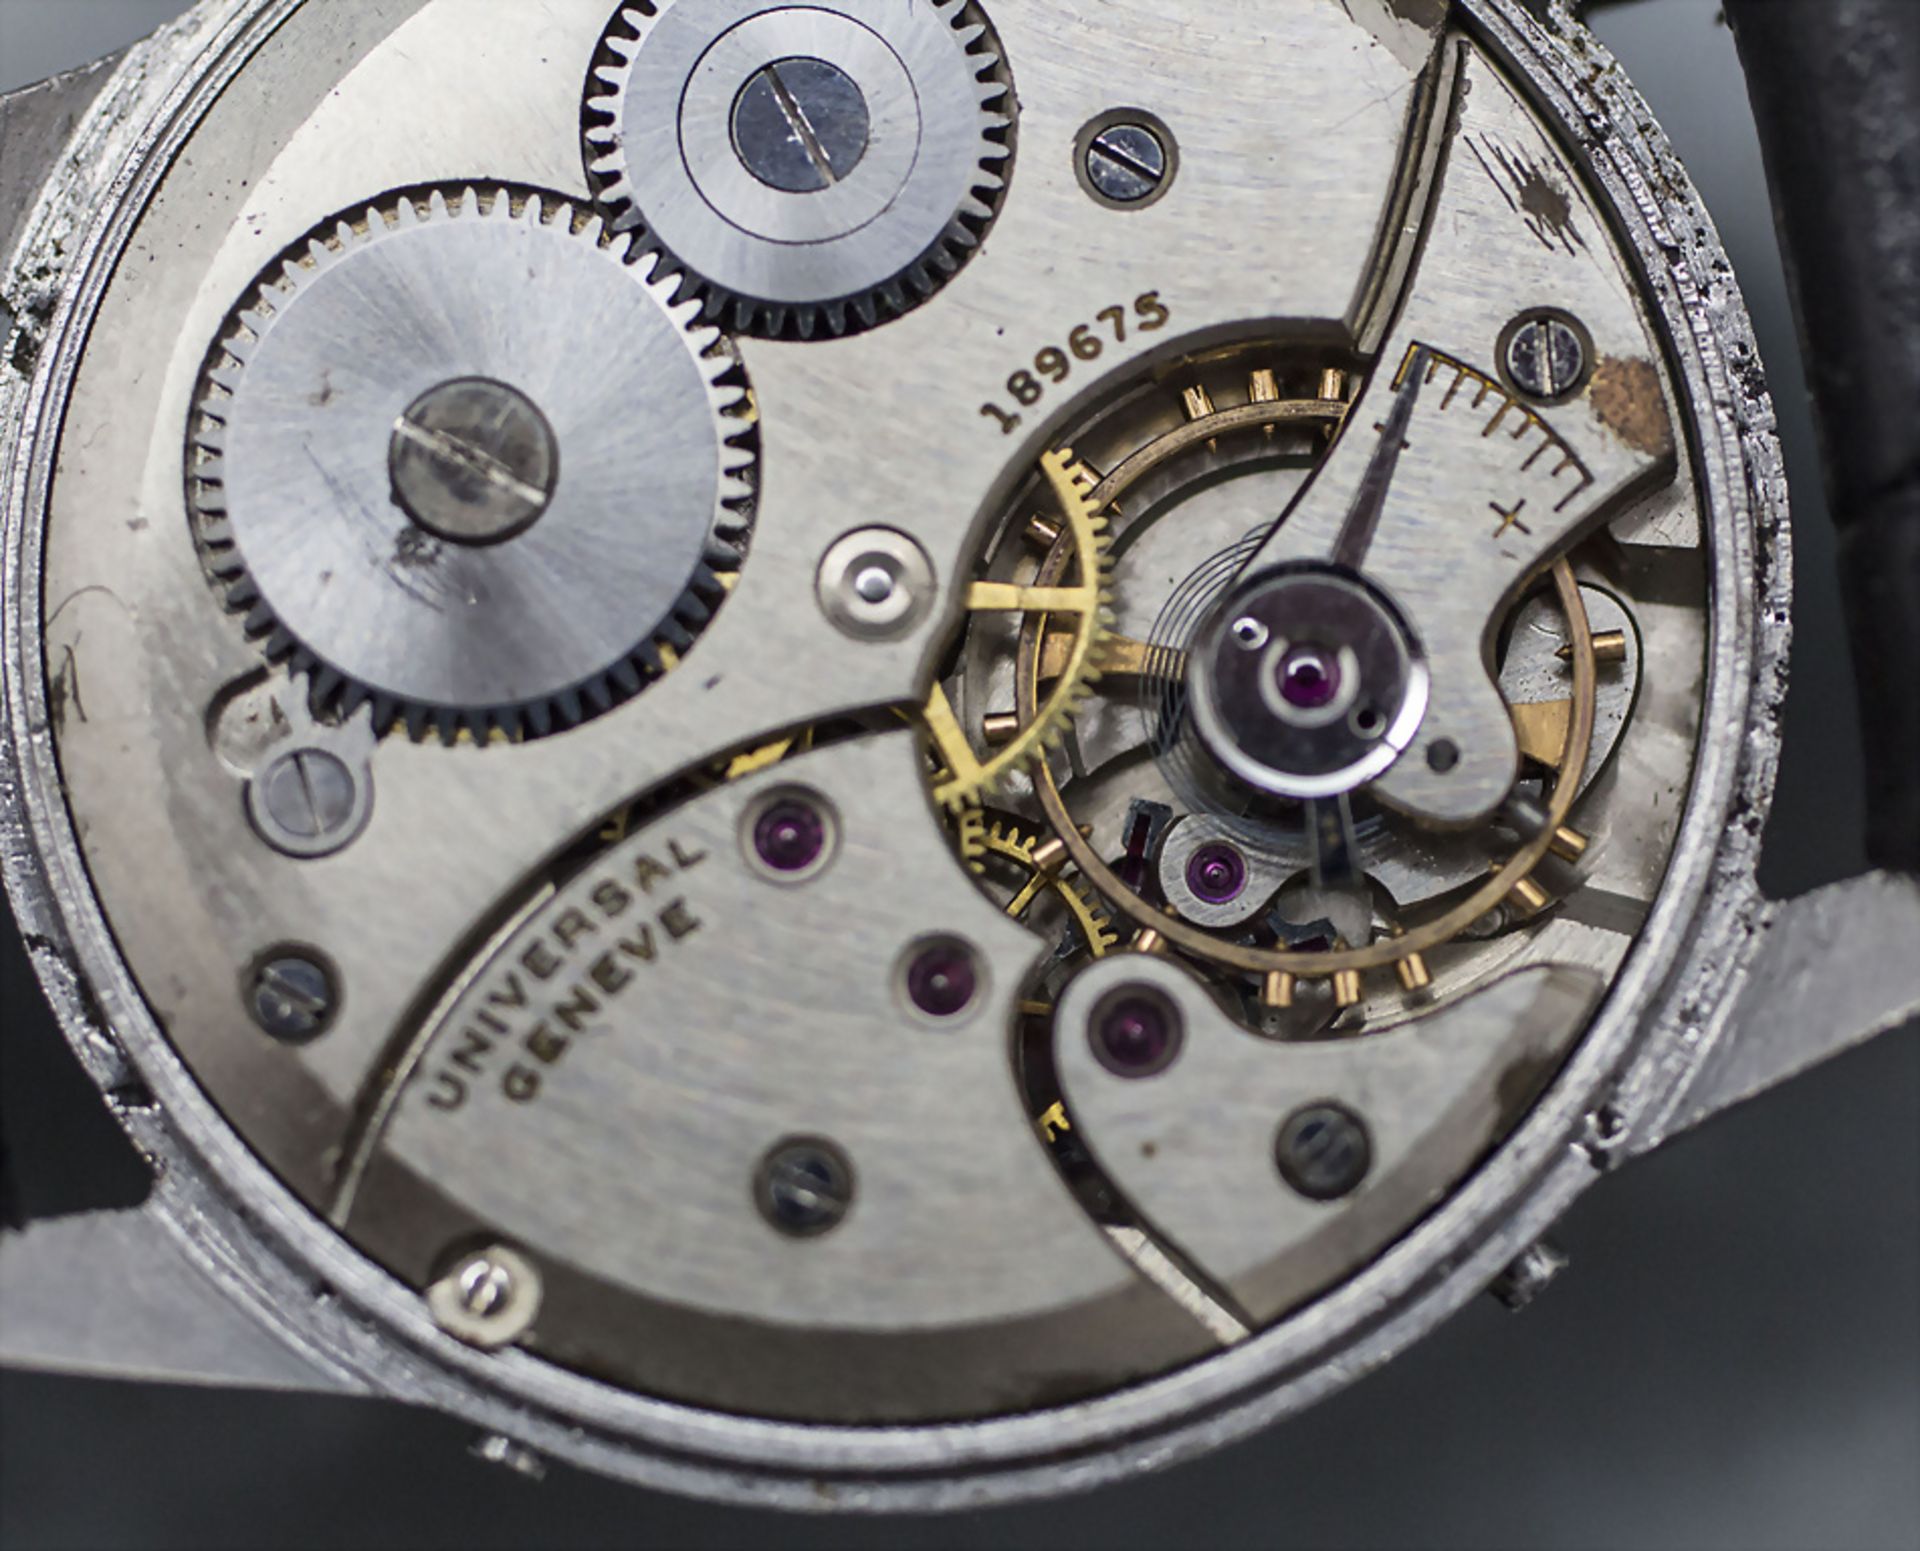 Armbanduhr mit Kalender / A wristwatch with calendar, Universal Geneve, um 1950 - Image 5 of 7